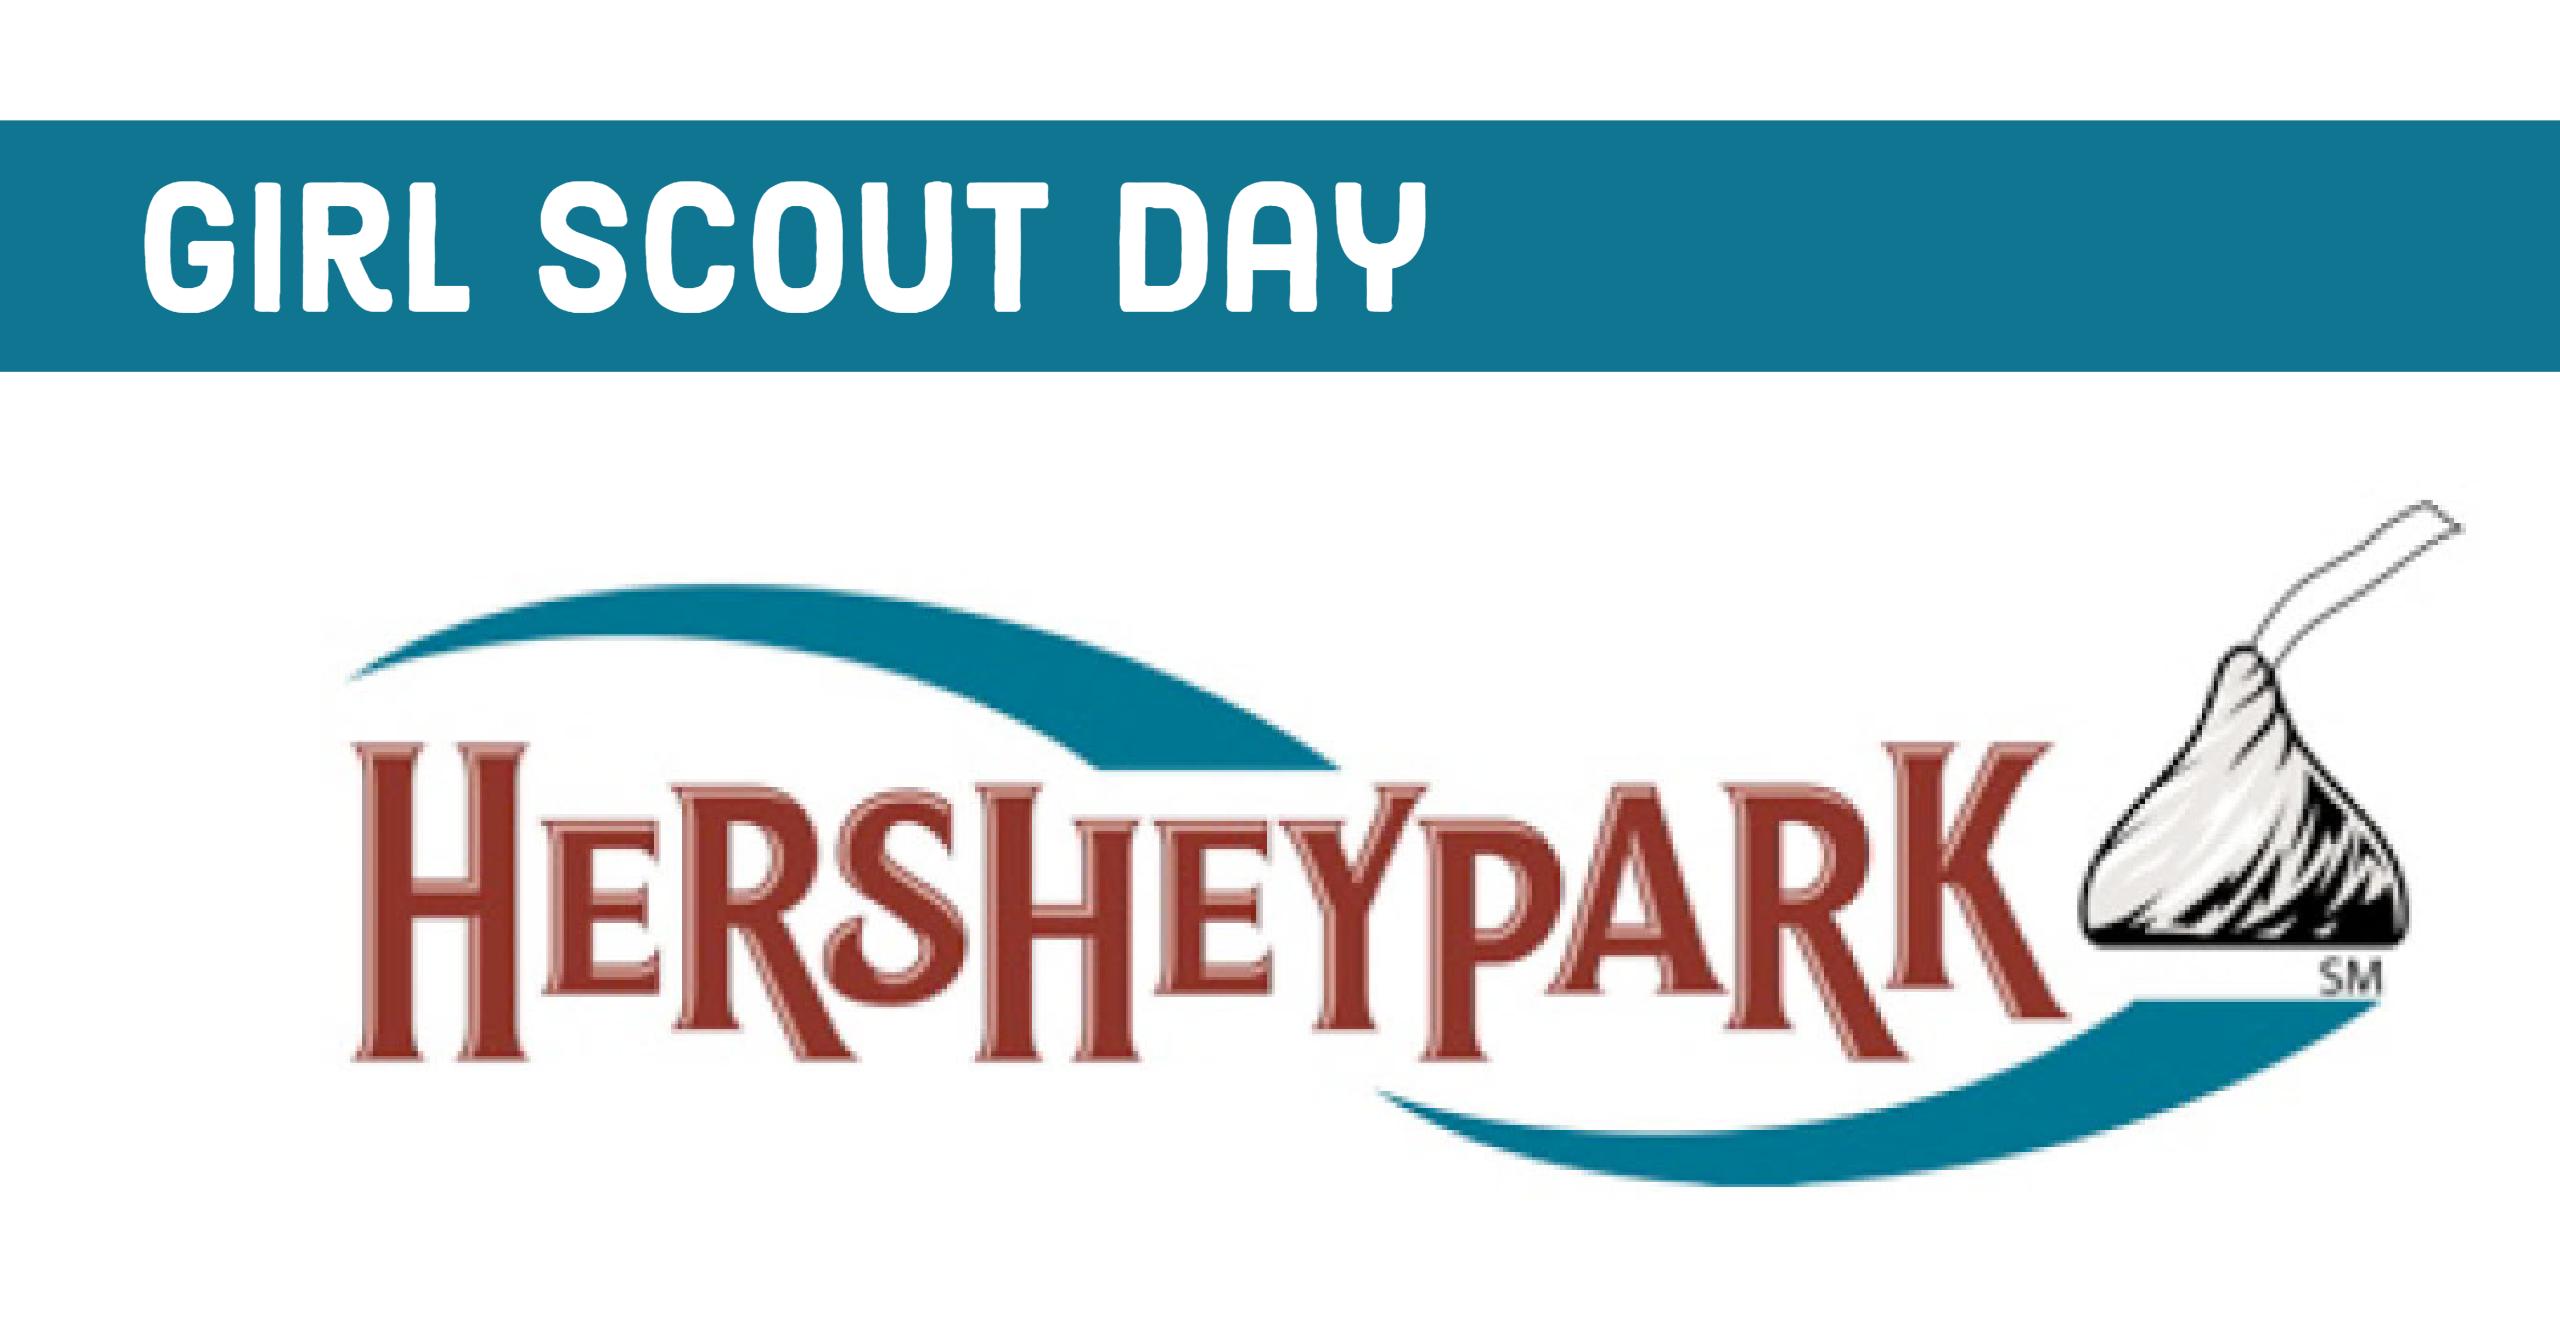 Hersheypark Logo - Girl Scout Day at Hersheypark